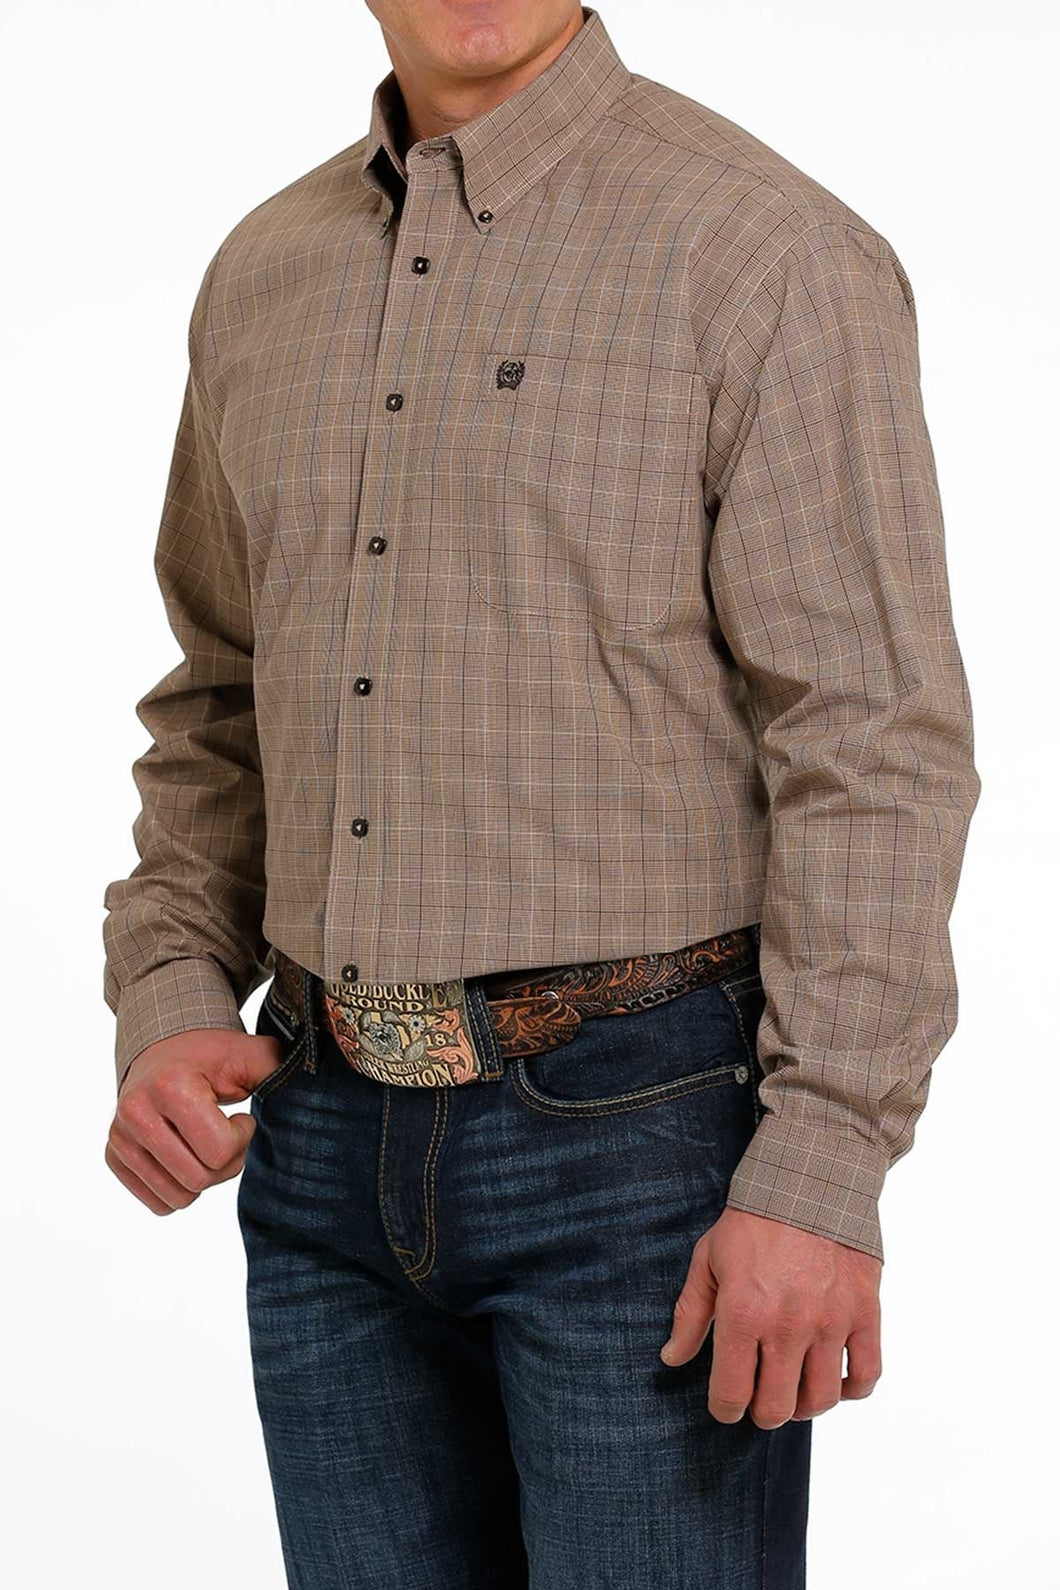 Cinch Men's Dark Khaki with Sand and Chocolate Plaid Long Sleeve Western Shirt